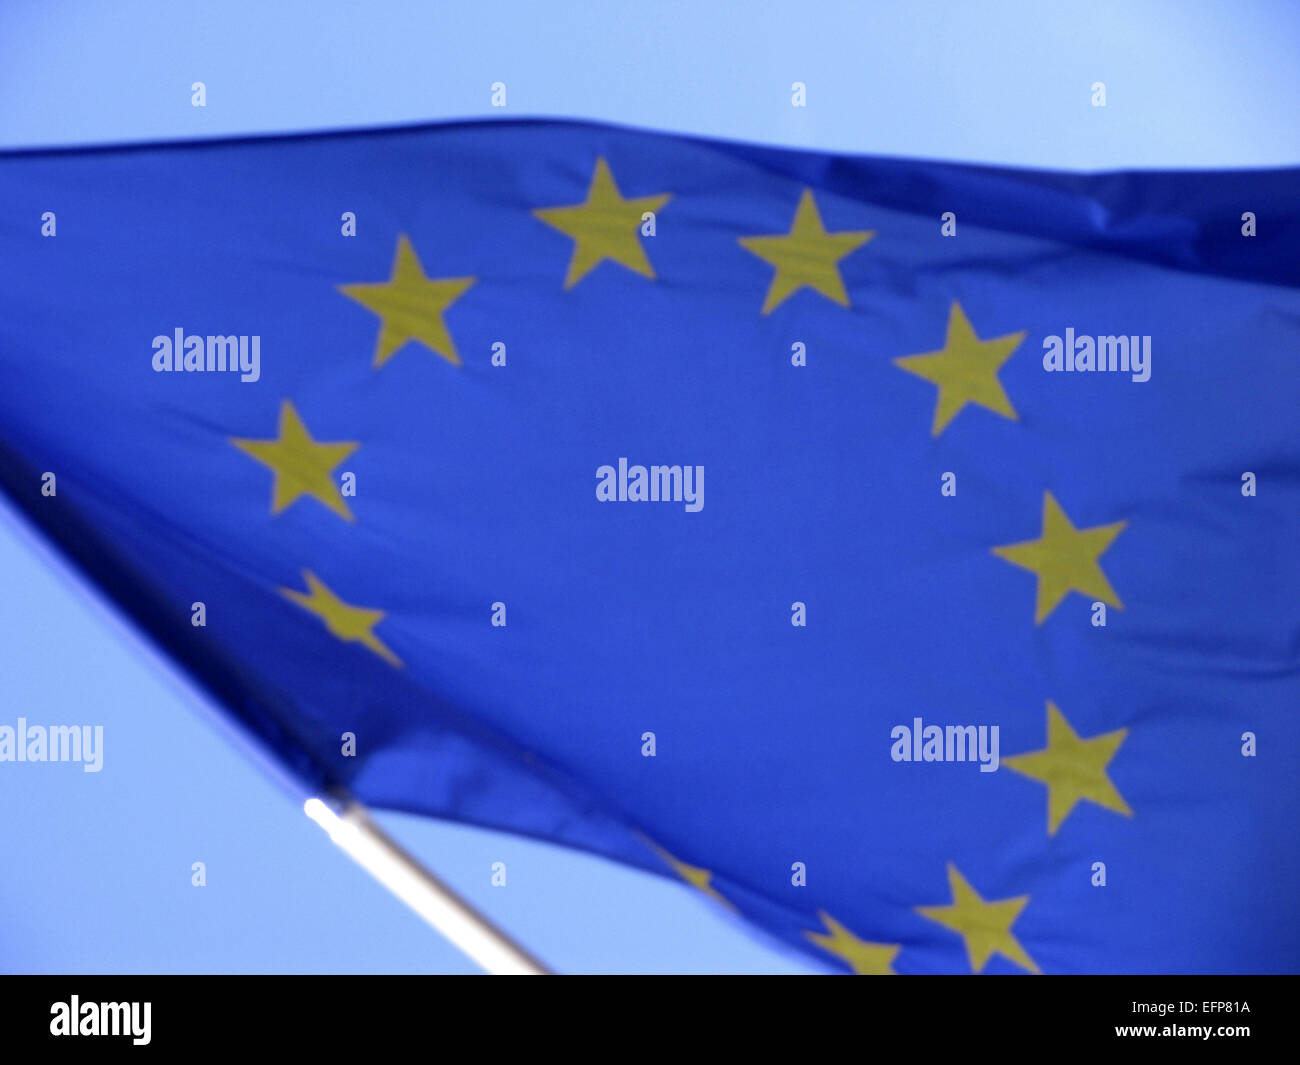 Europaflagge Sachaufnahme Europa Flagge Fahne Europaeisch Europafahne Europa-flagge Europa-fahne Wehen Wind Eu Europaeische Unio Stock Photo